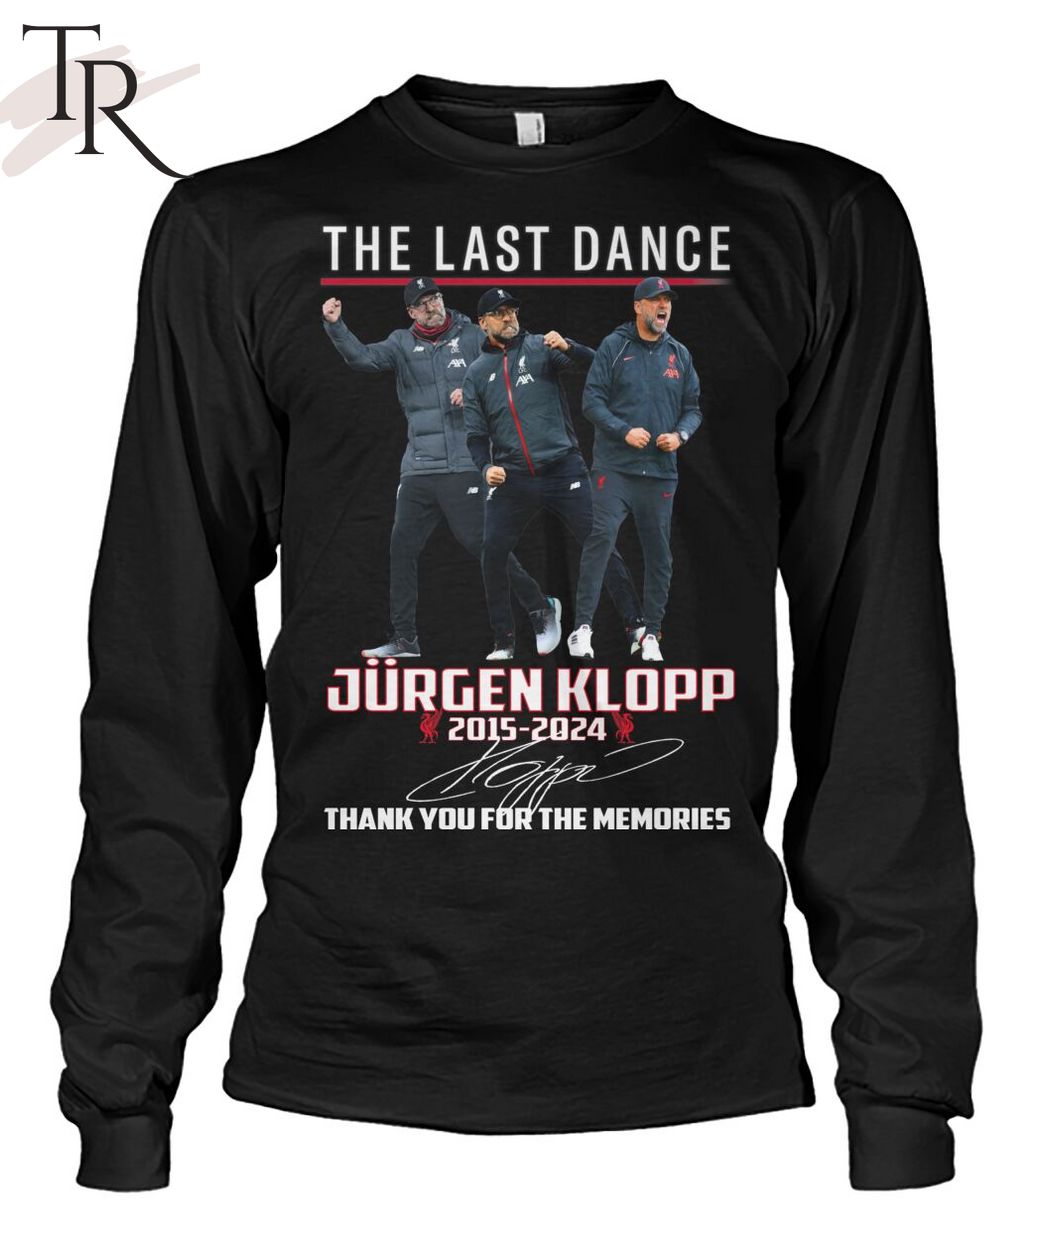 The Last Dance Jurgen Klopp 2015 - 2024 Thank You For The Memories T-Shirt